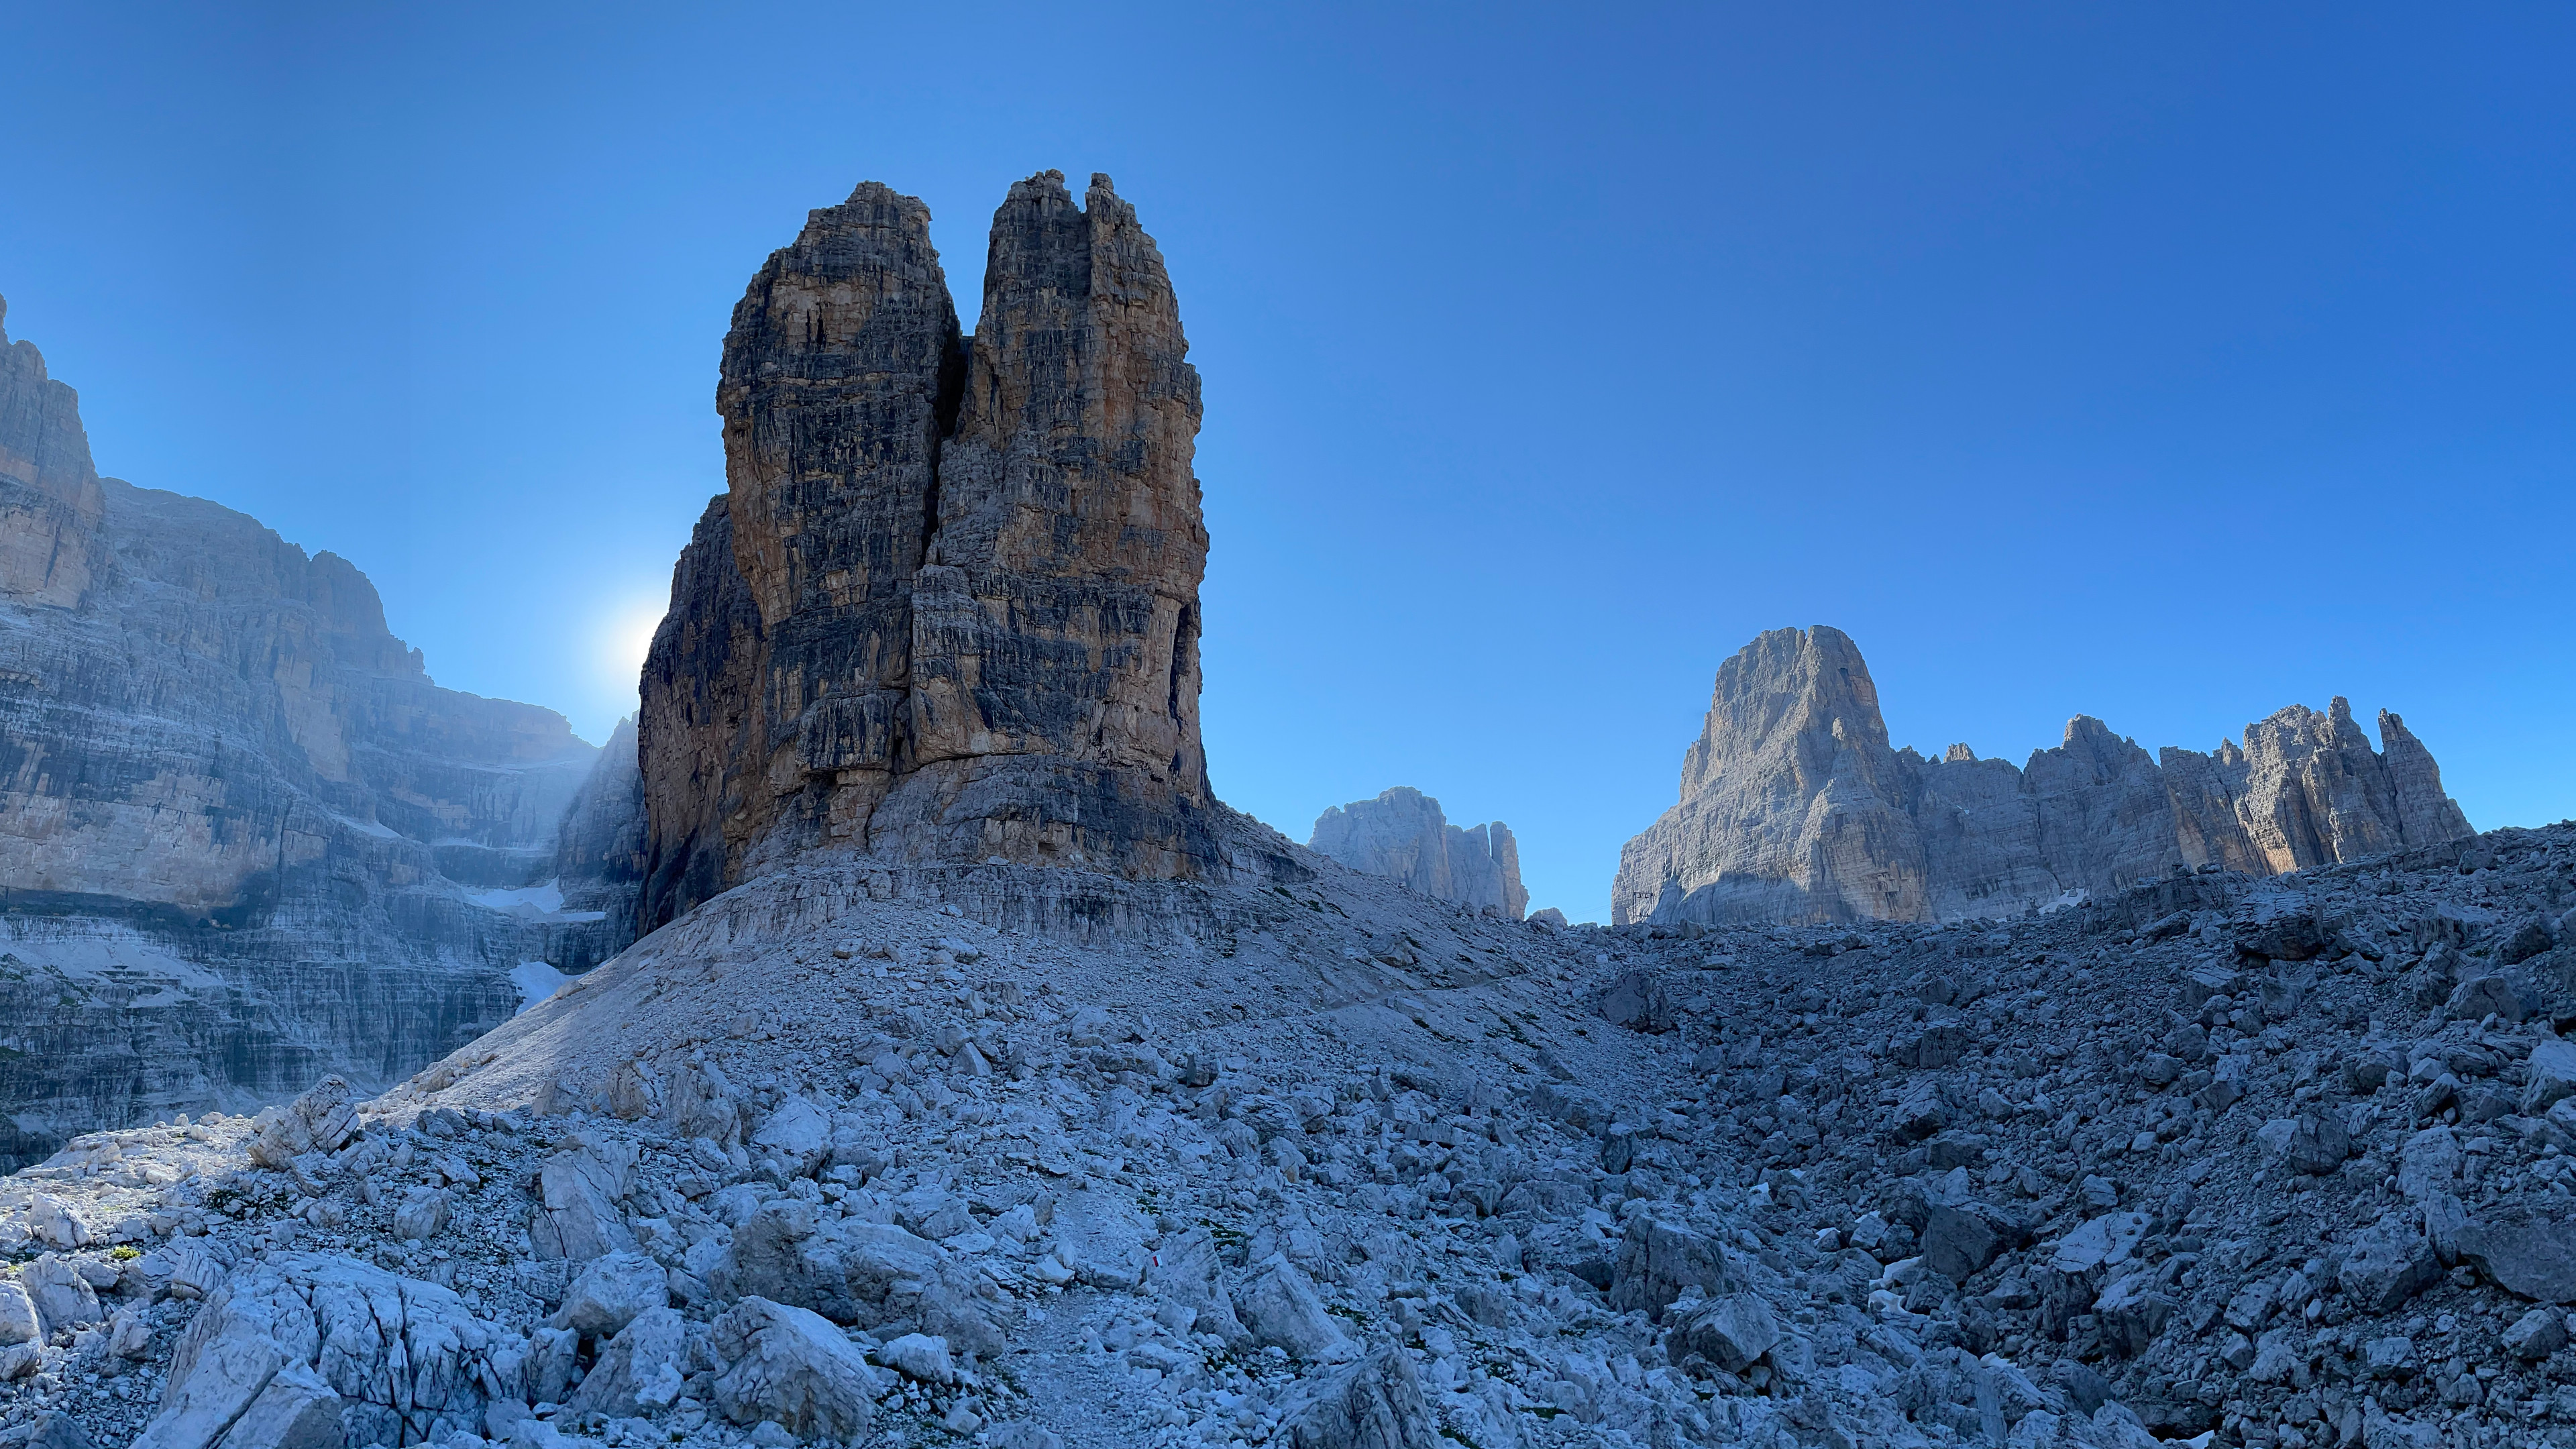 General 3840x2160 Dolomites Cima Molveno Italy cliff rocks landscape blue